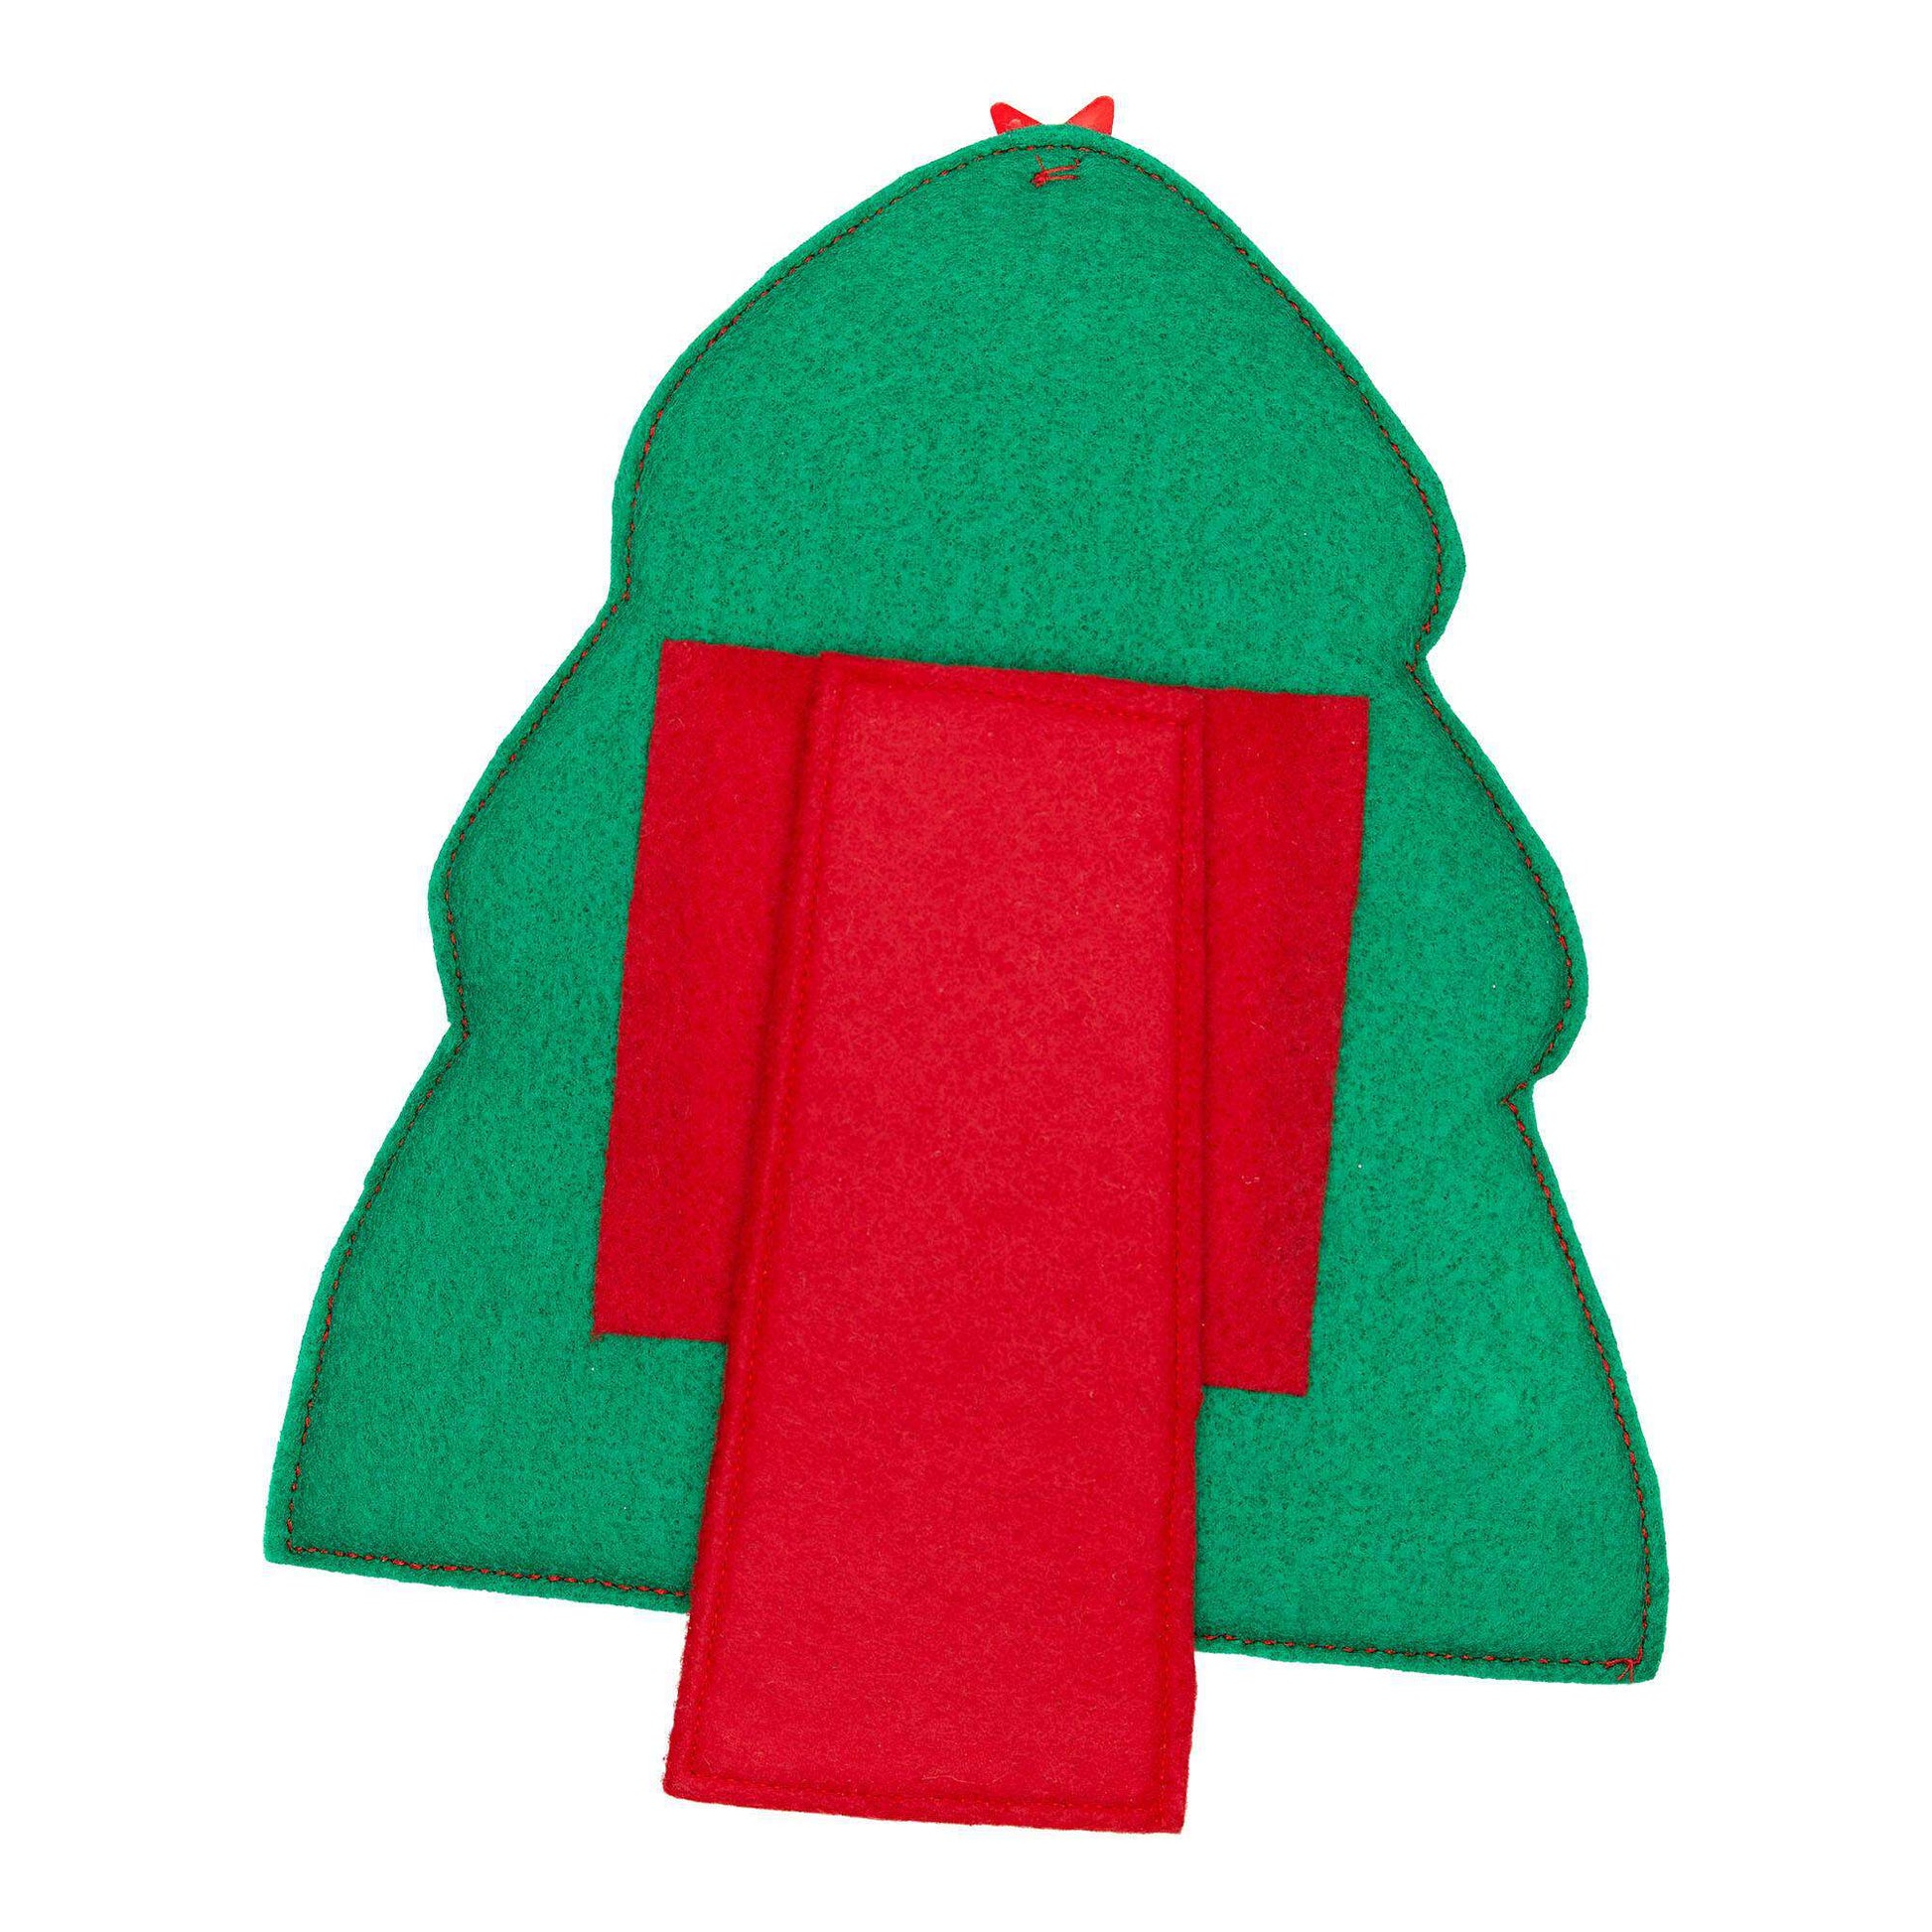 Free Coats & Clark Christmas Tree Photo Frame Sewing Pattern